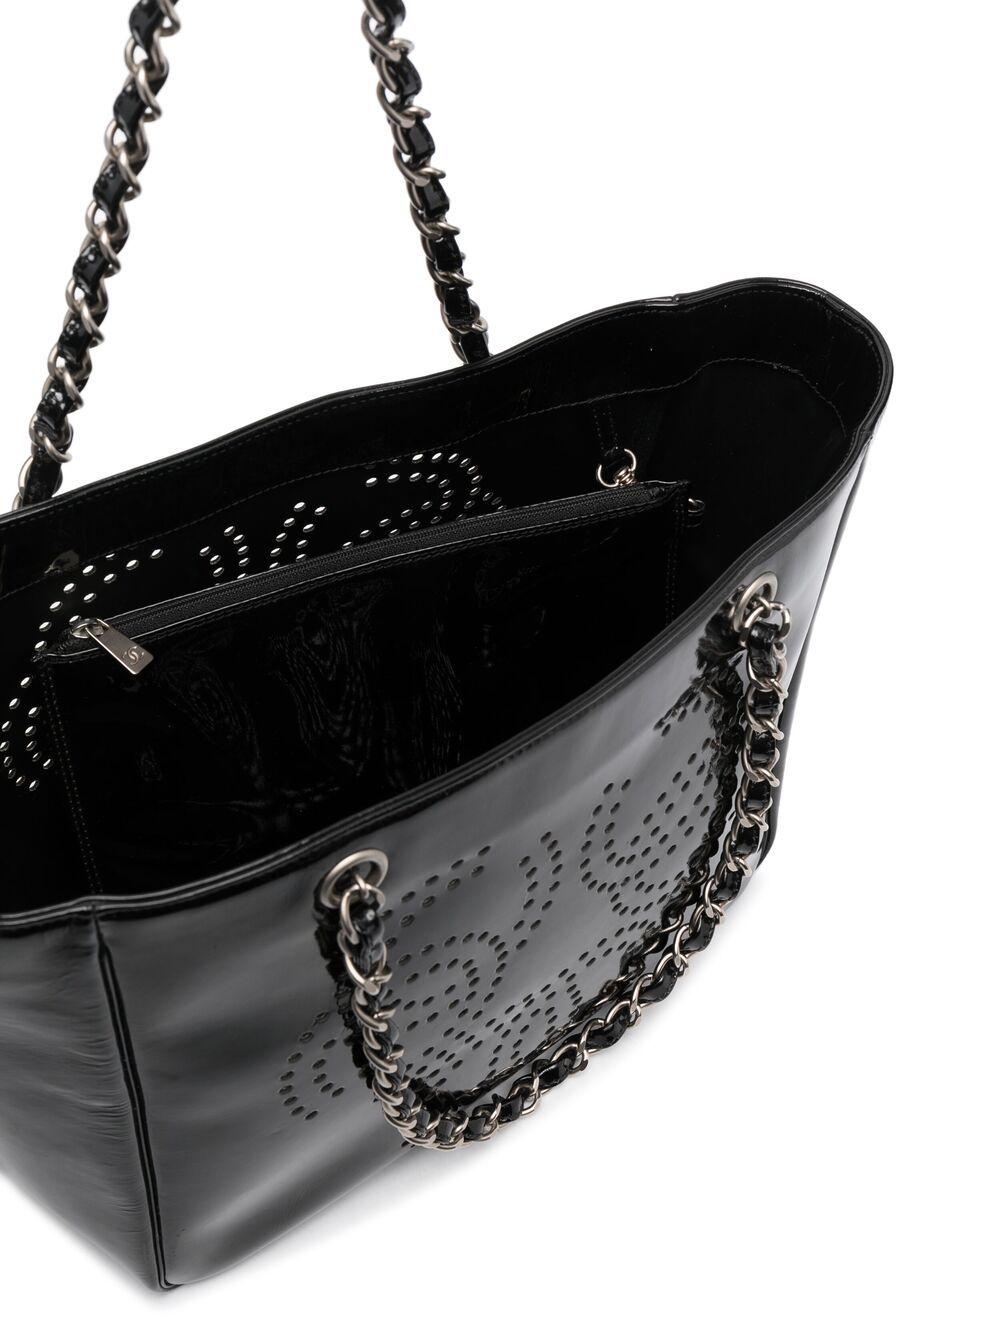 Women's Chanel Black Leather Shoulder Tote Bag For Sale